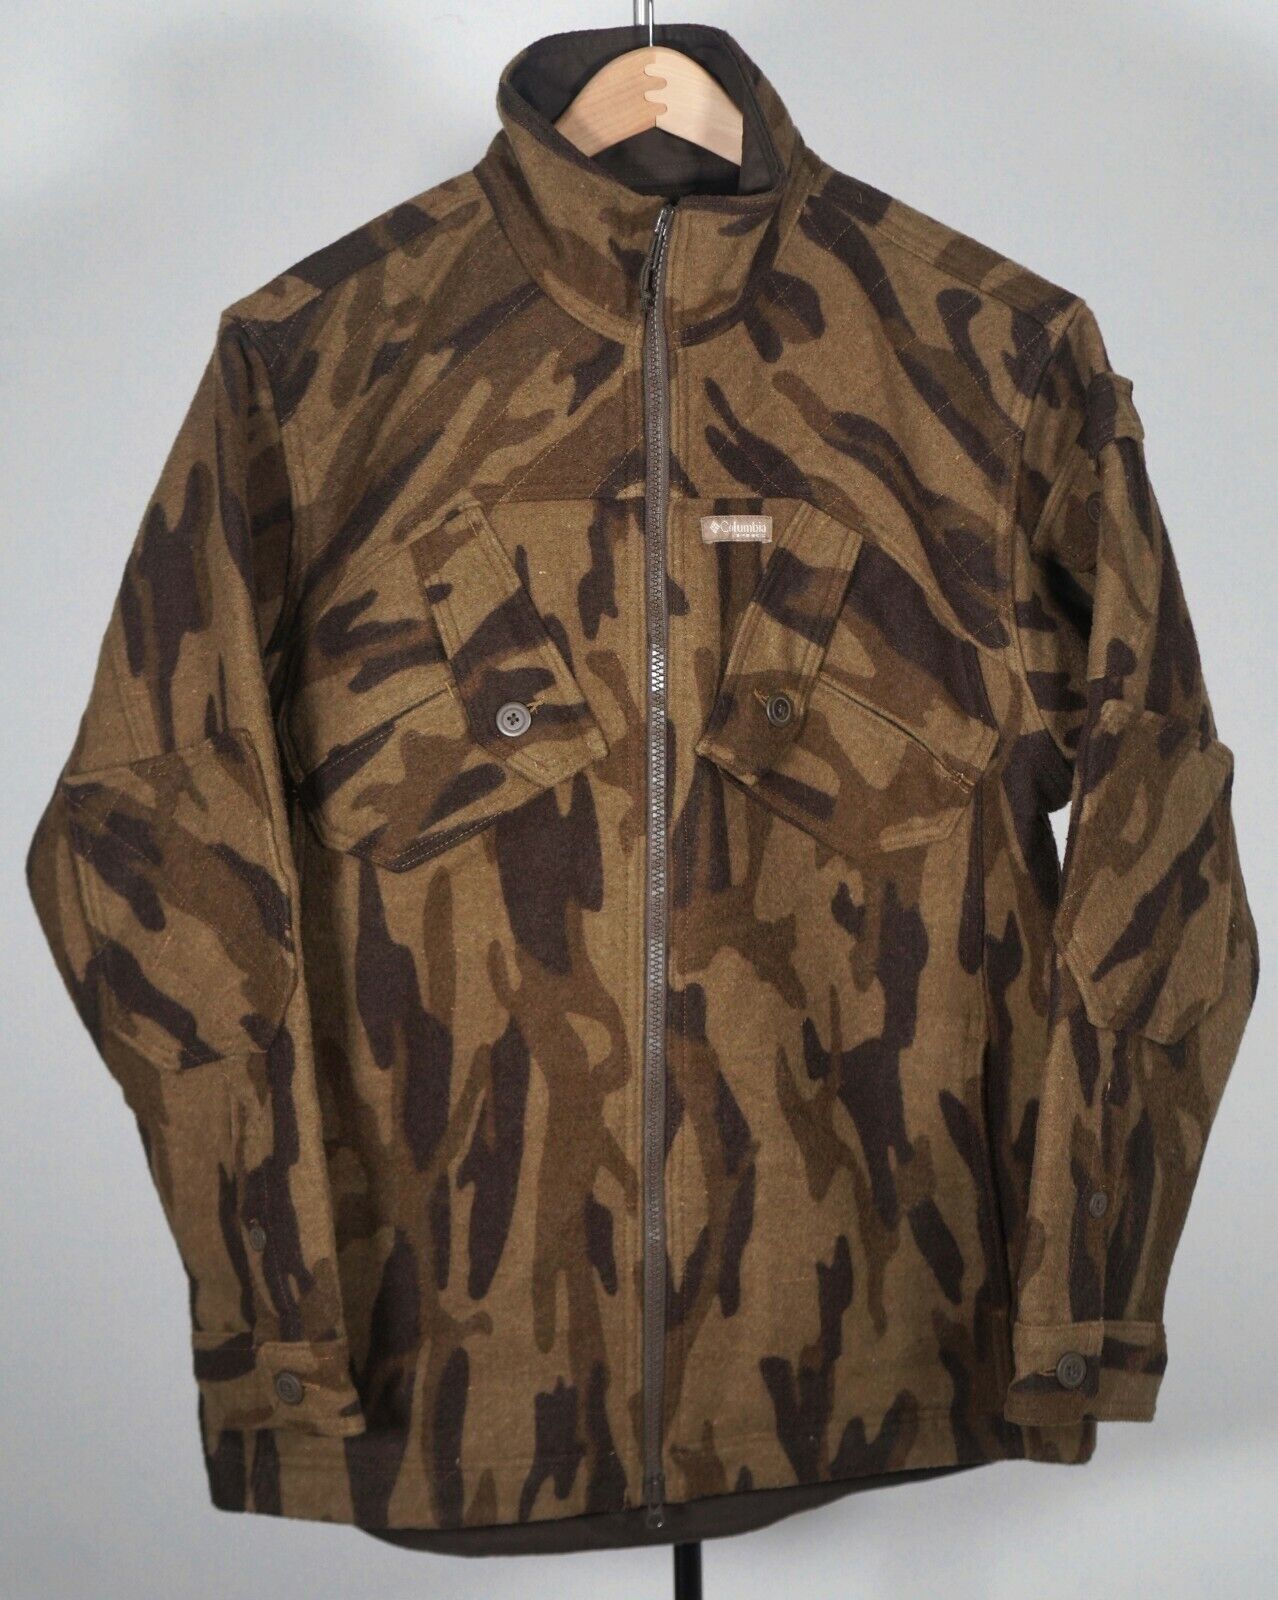 COLUMBIA Sportswear PHG Brown Camo Wool Hunting Zip Jacket Size M (L/XL Fit)